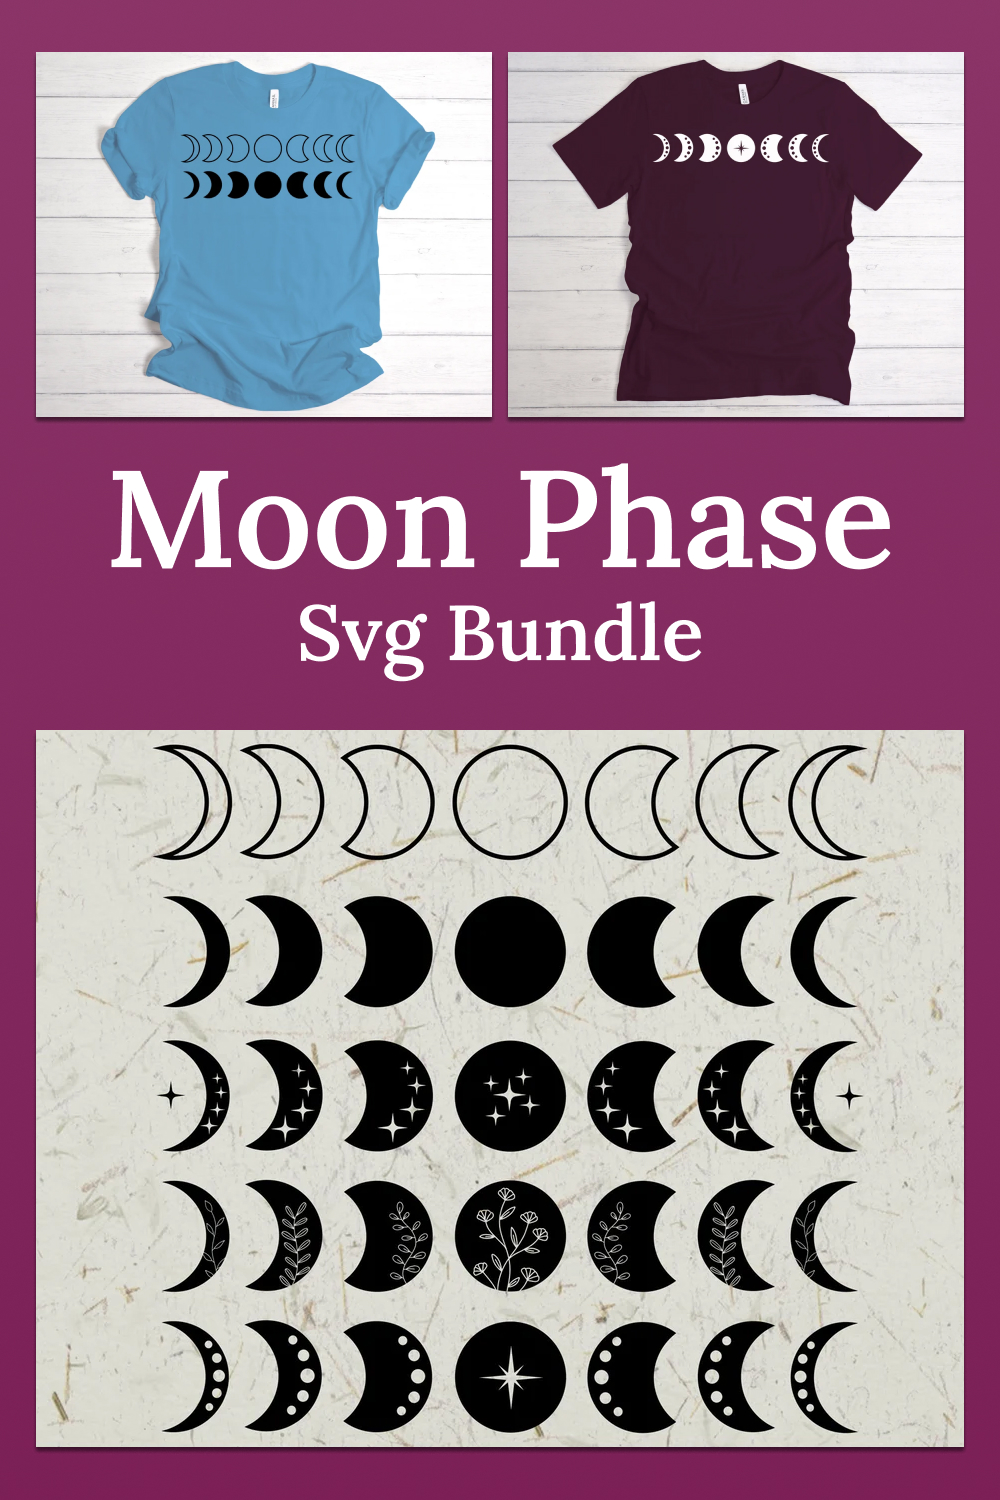 Moon phase svg bundle of pinterest.